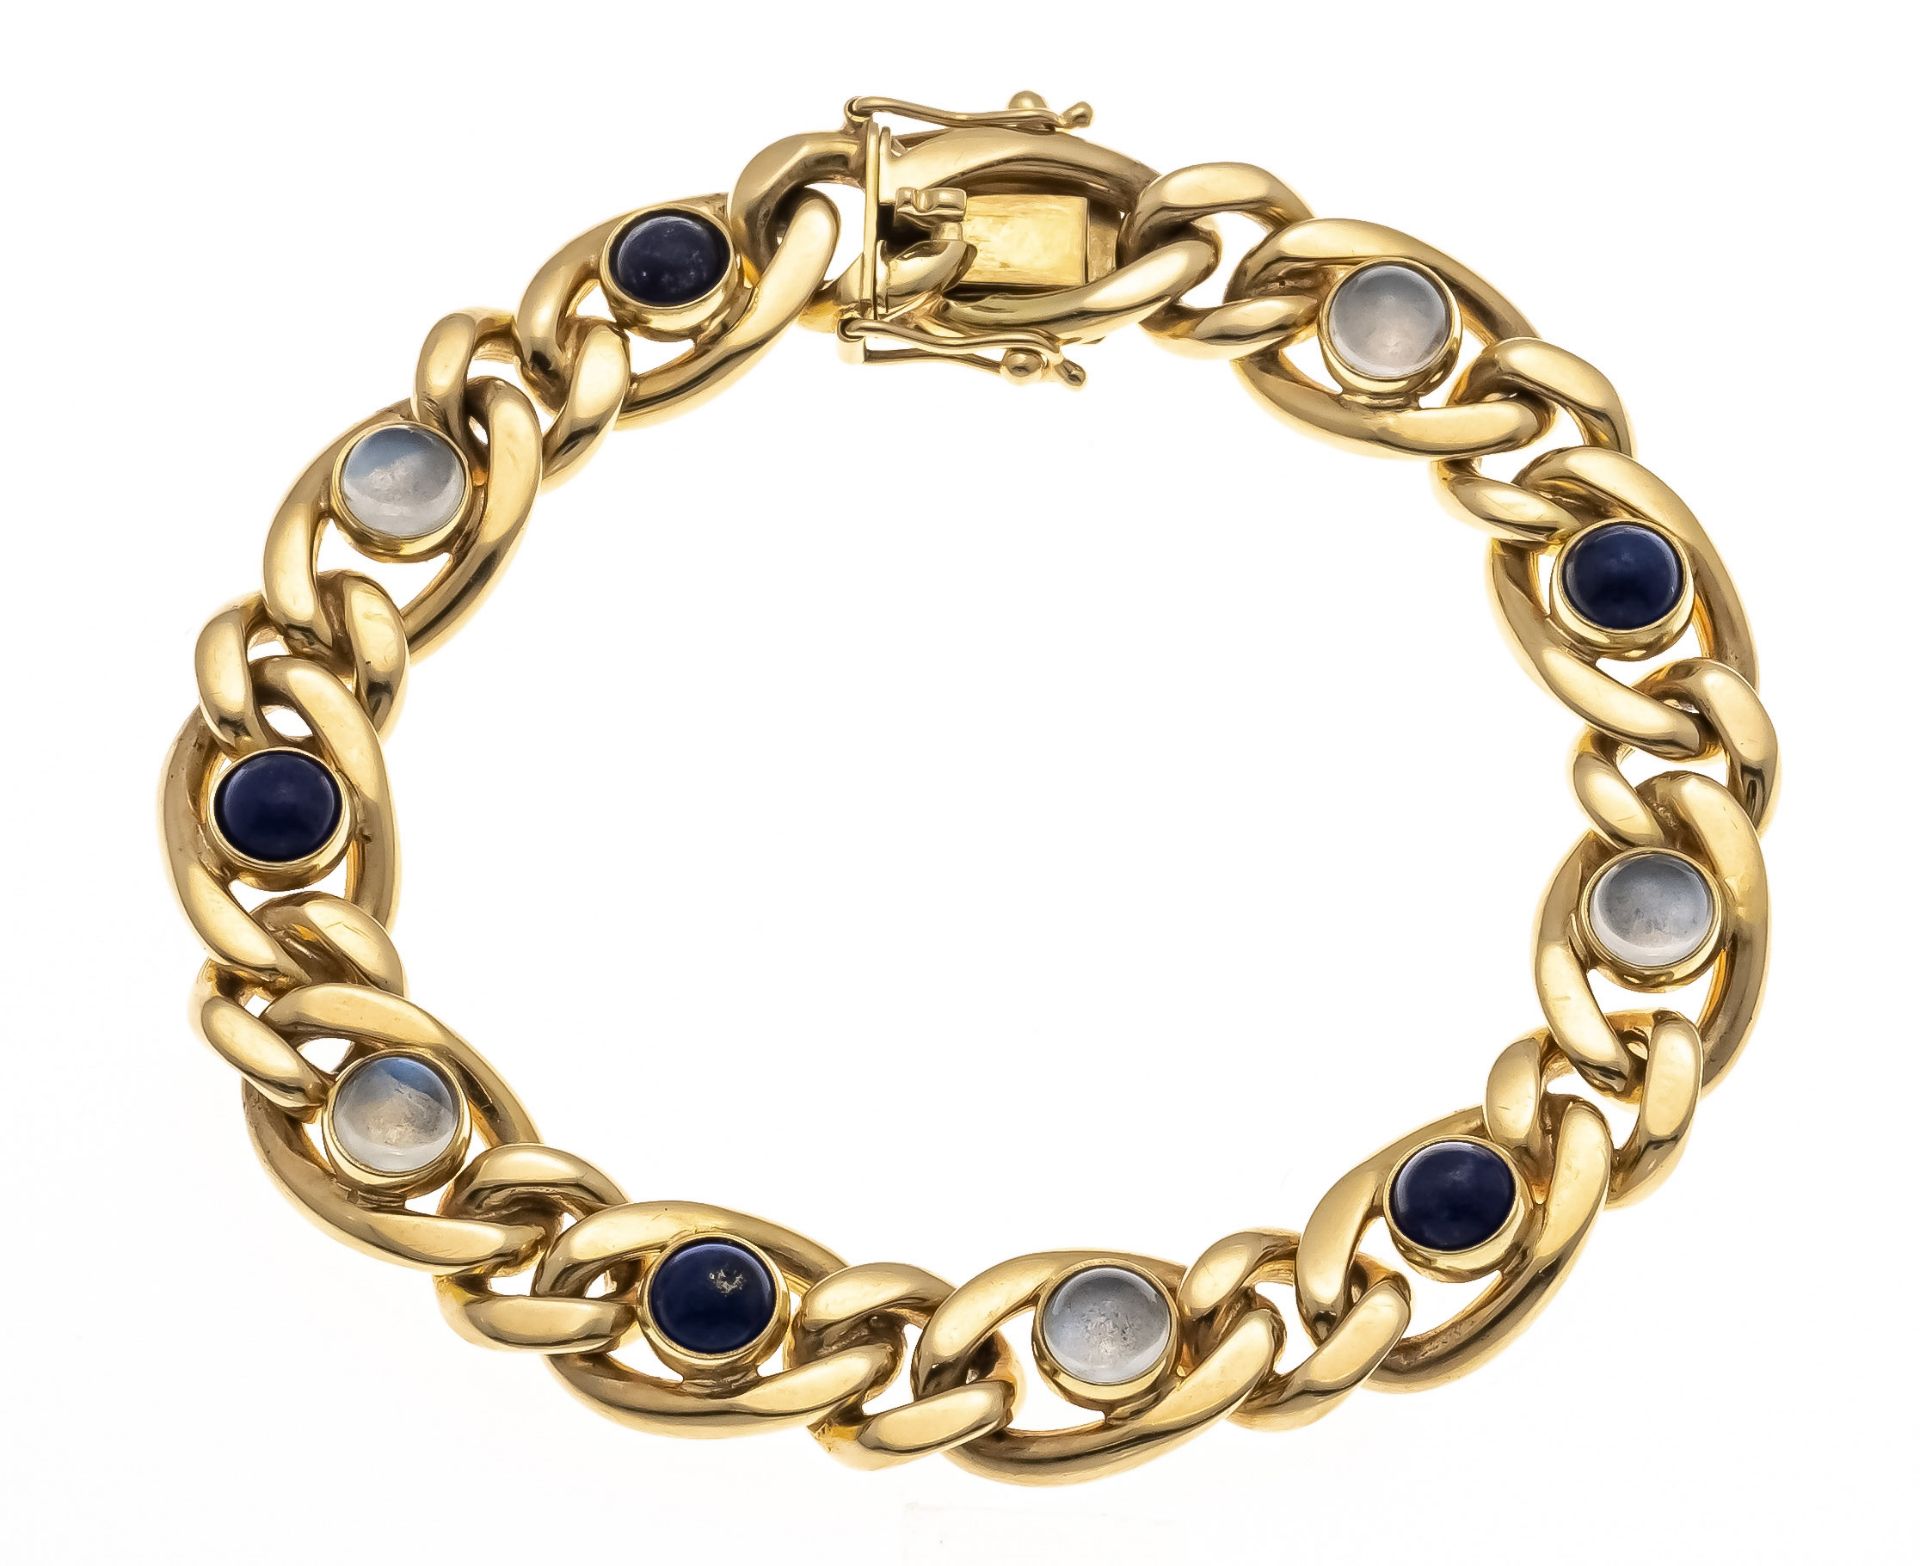 Lapis lazuli moonstone bracelet GG 585/000 with lapis lazuli and moonstone cabochons 5 mm, box clasp